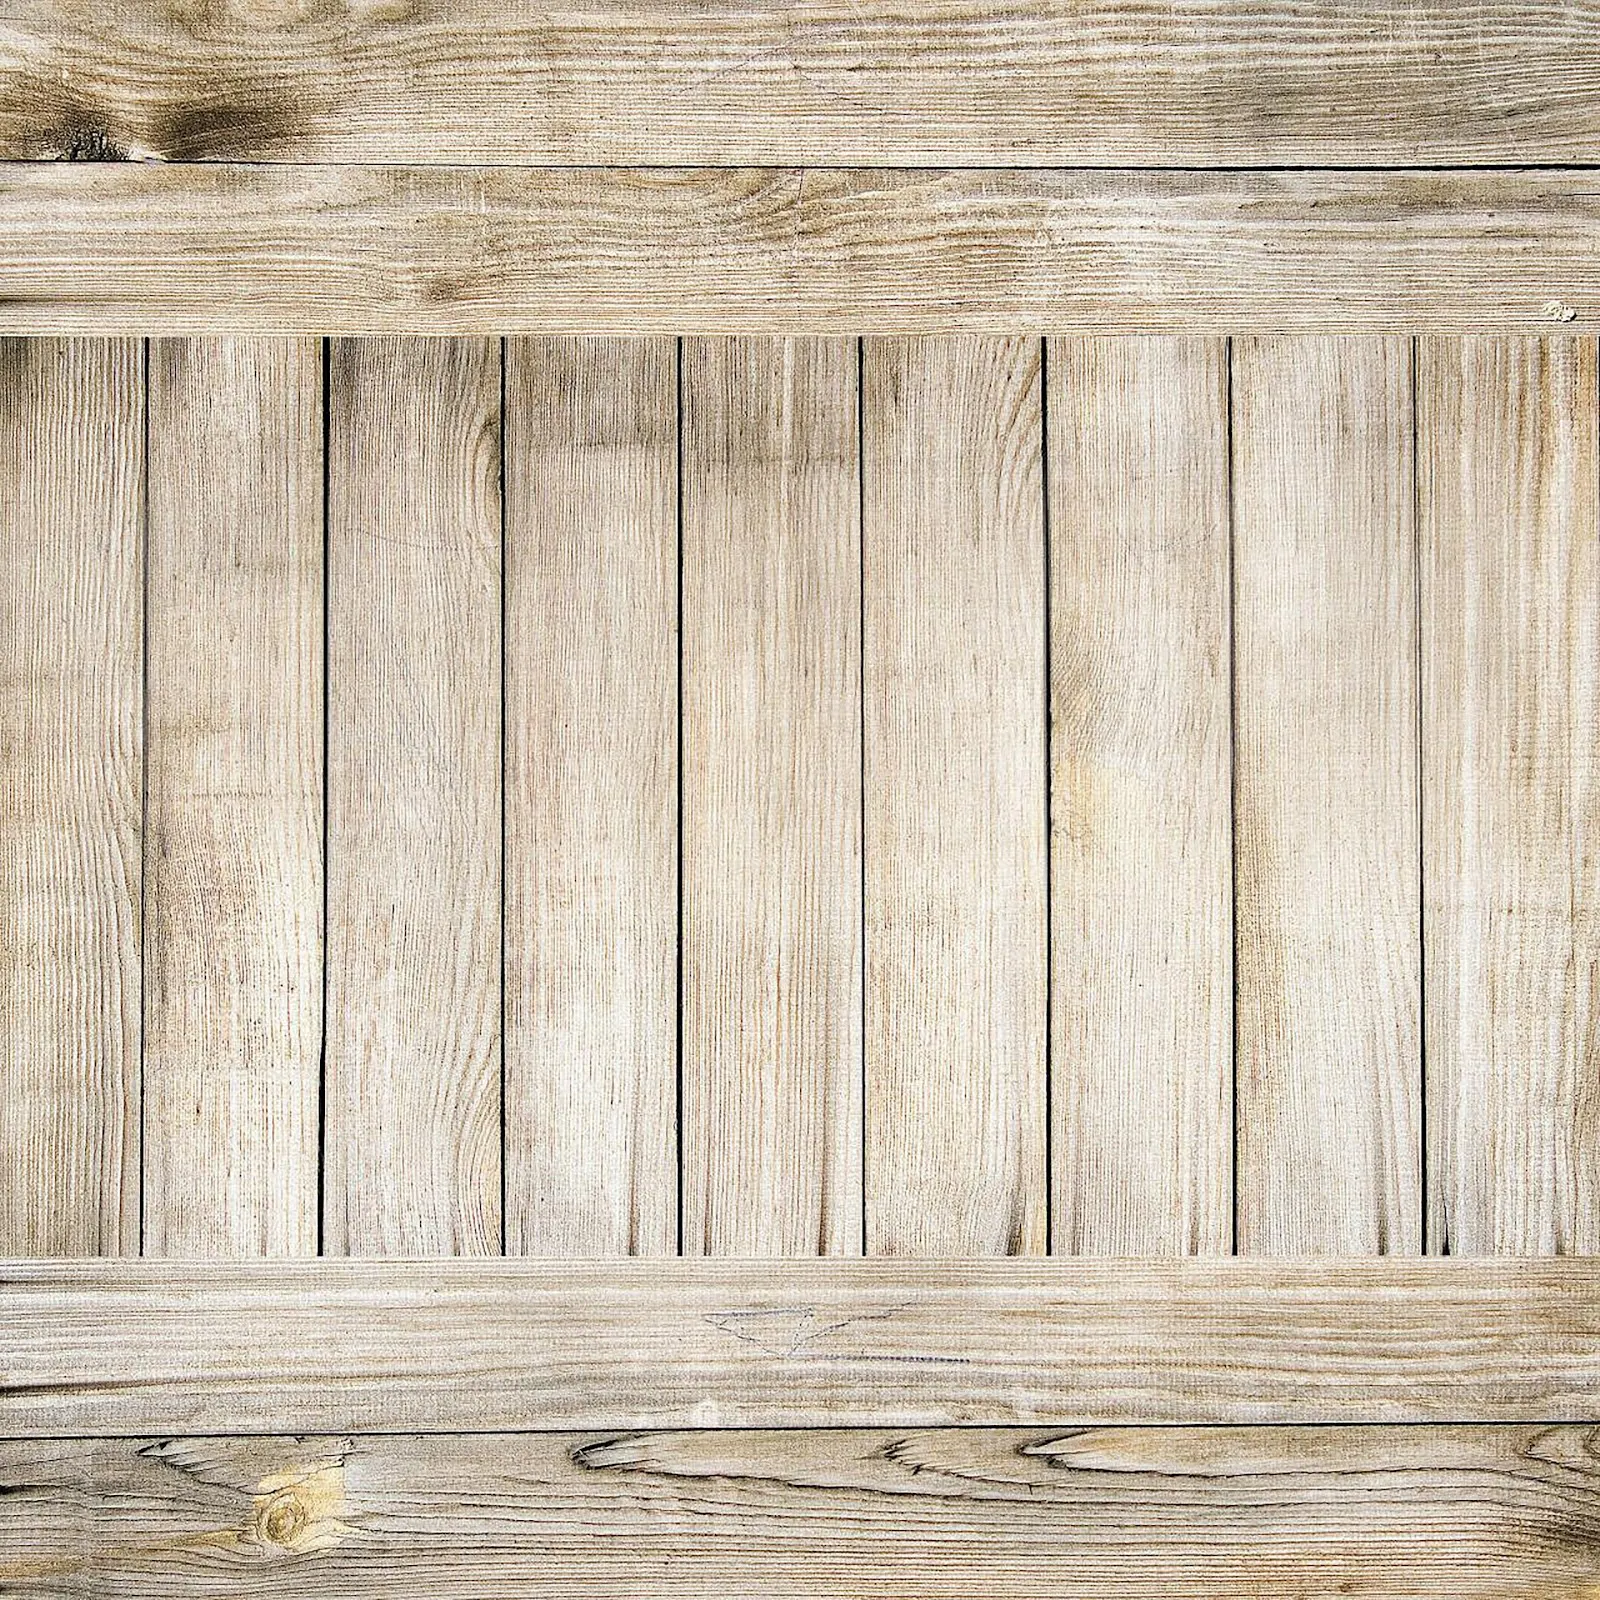 fondos con textura de madera para usar en menus de restaurante